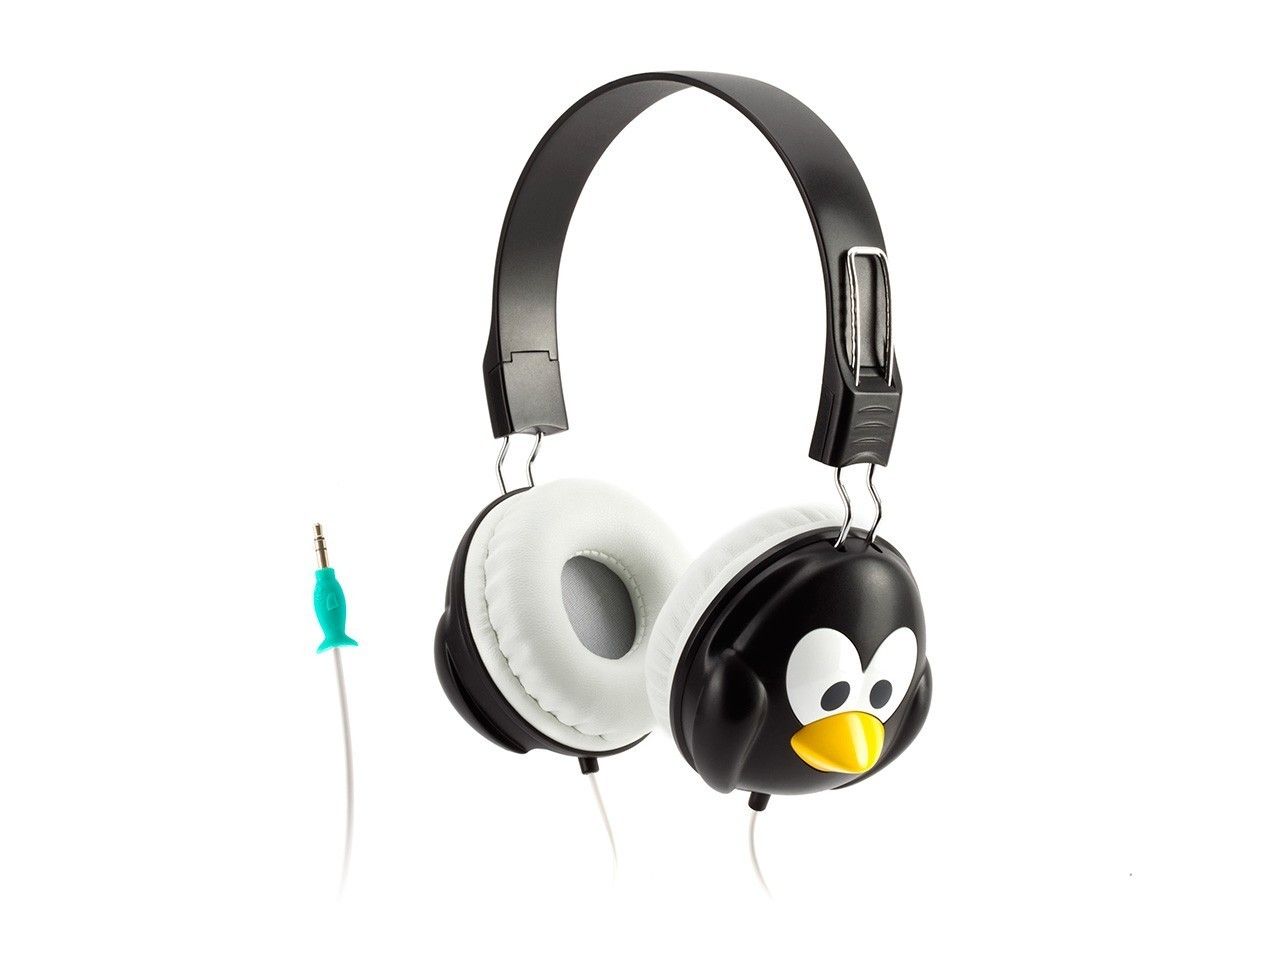 Griffin kaZoo headphones: Great volume limiting headphones for kids 